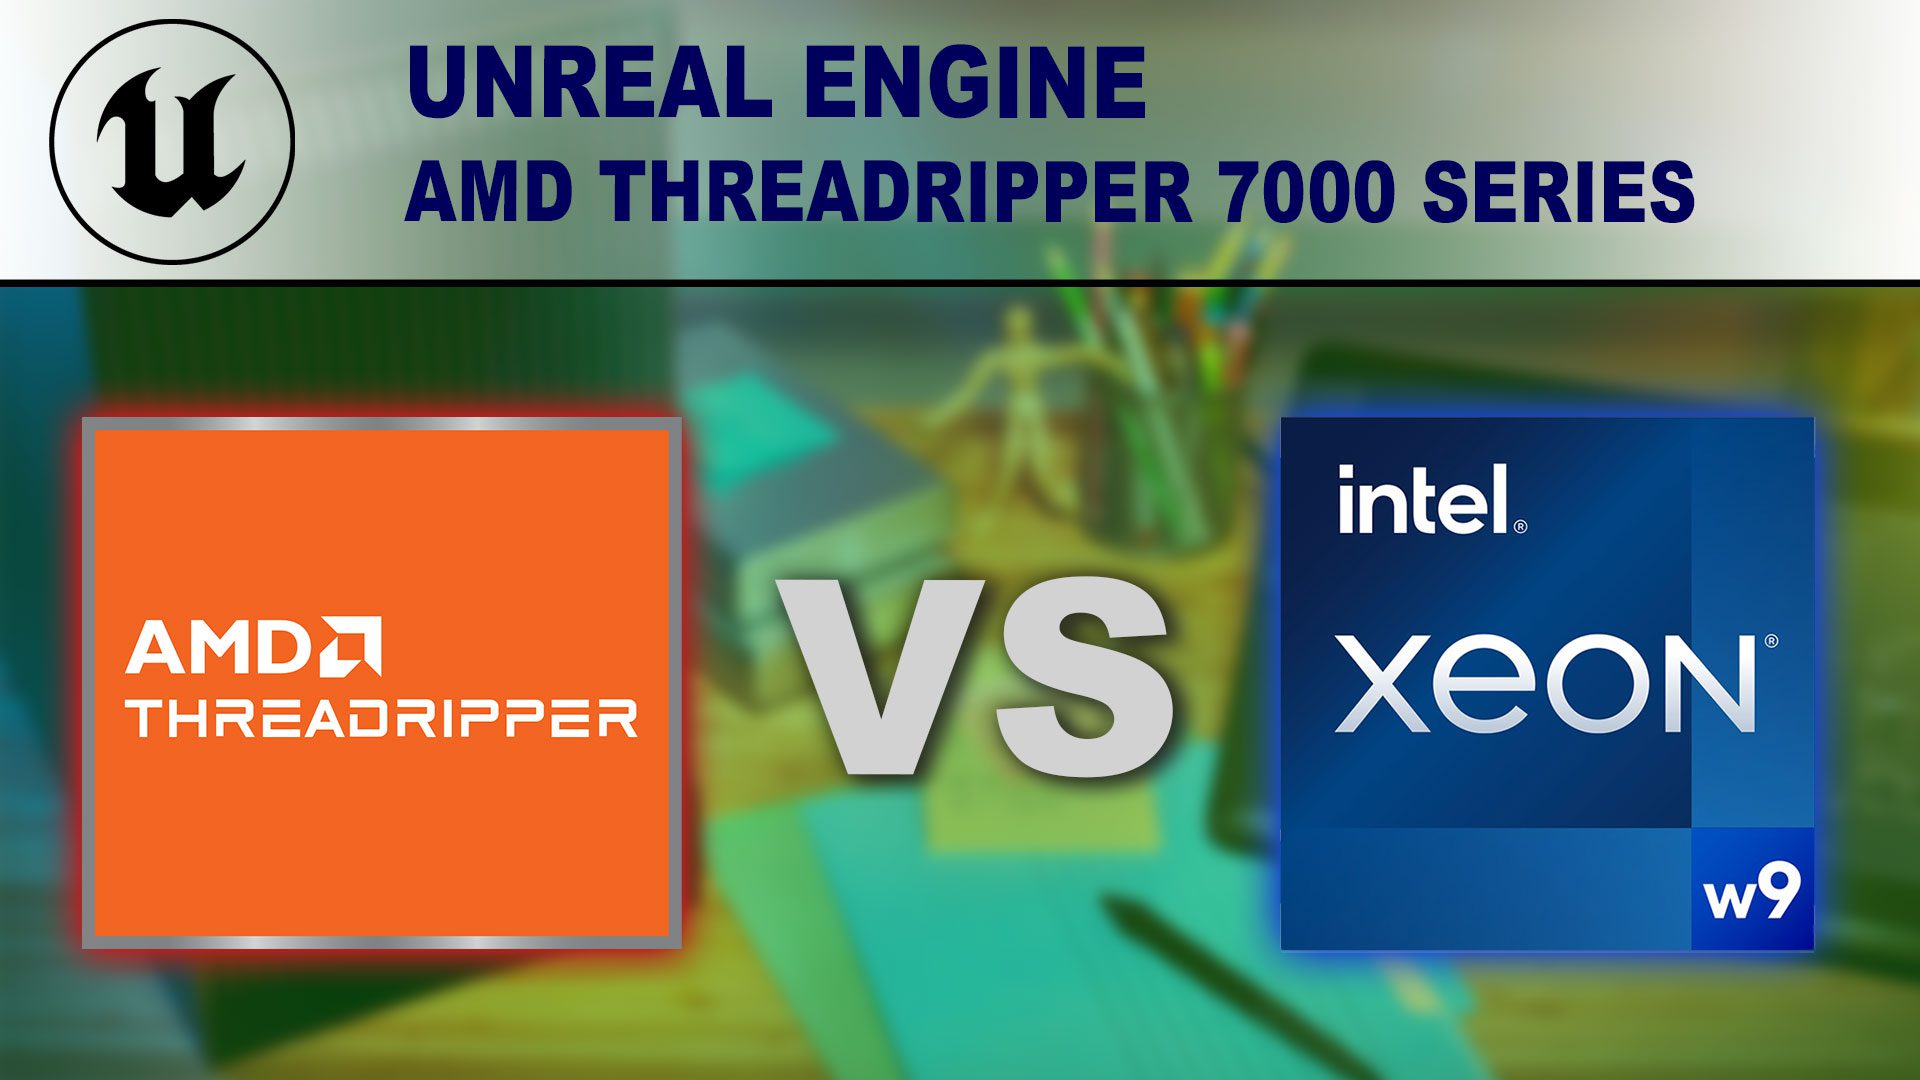 Decorative Image: Unreal Engine - AMD Threadripper vs Intel Xeon